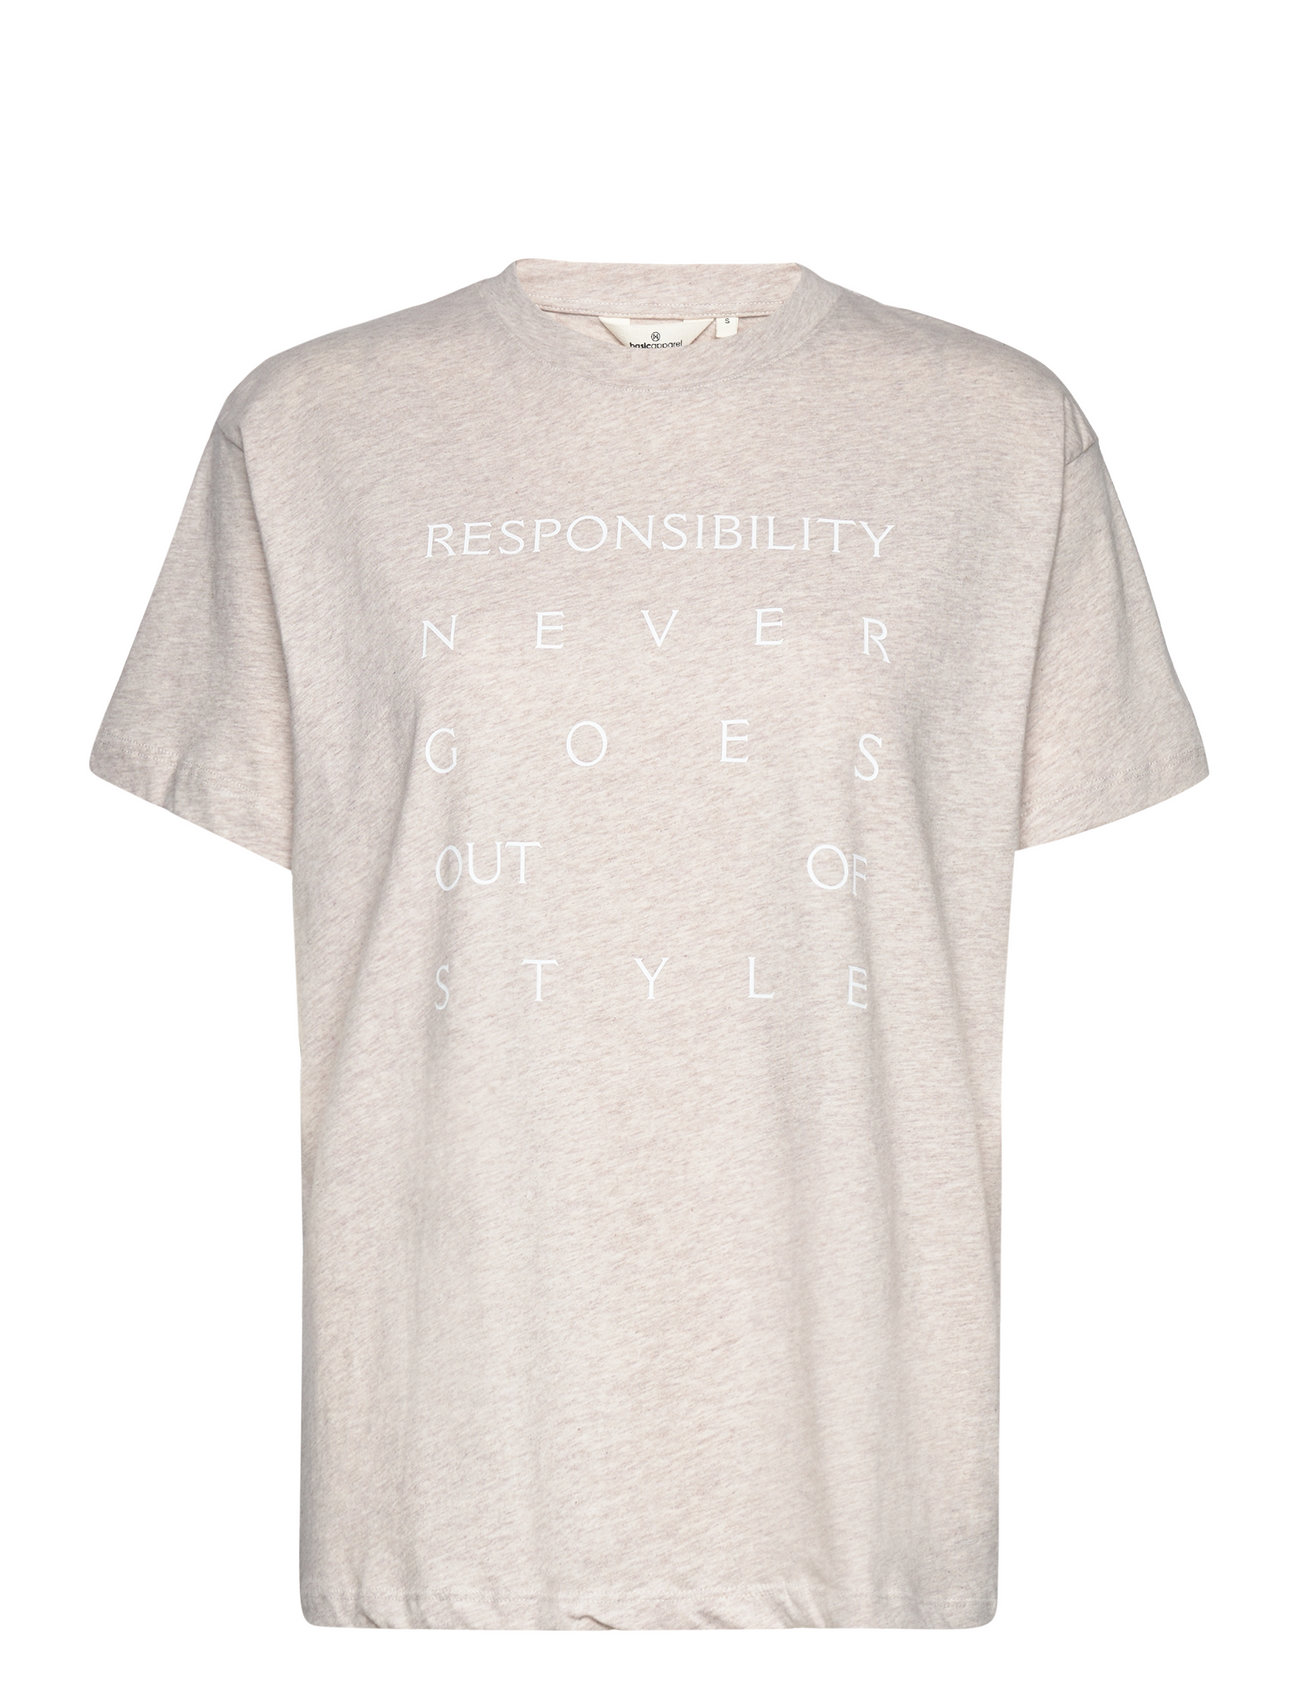 Responsibility T-Shirt Gots Tops T-shirts & Tops Short-sleeved Cream Basic Apparel